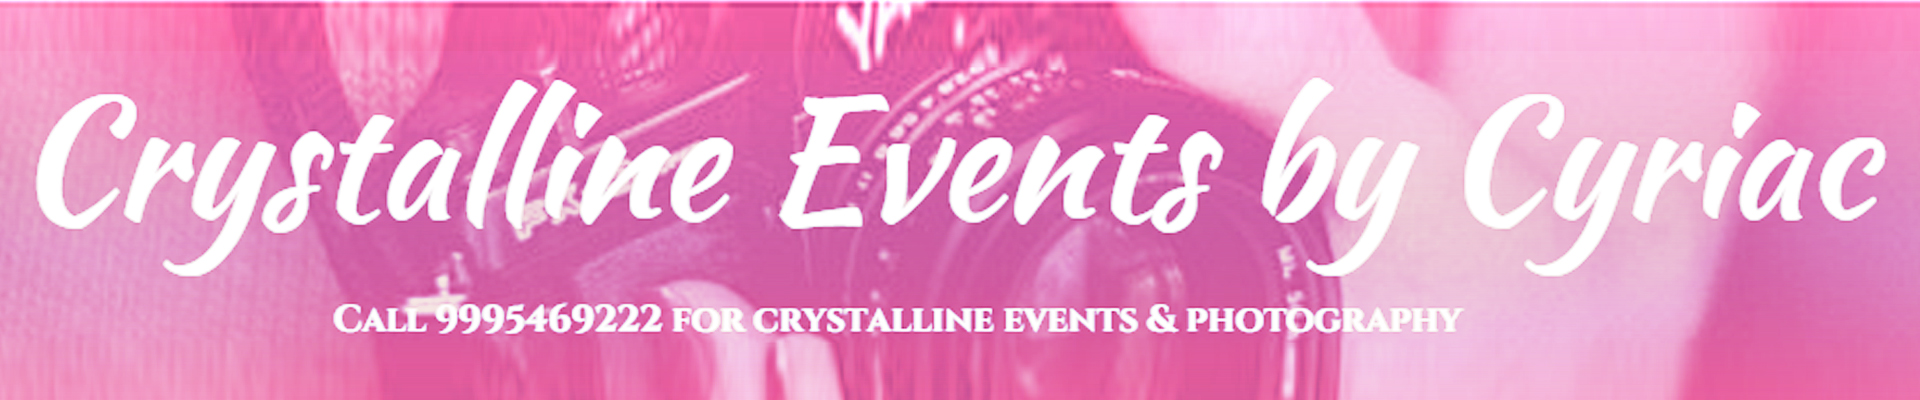 Crystalline Event Gallery